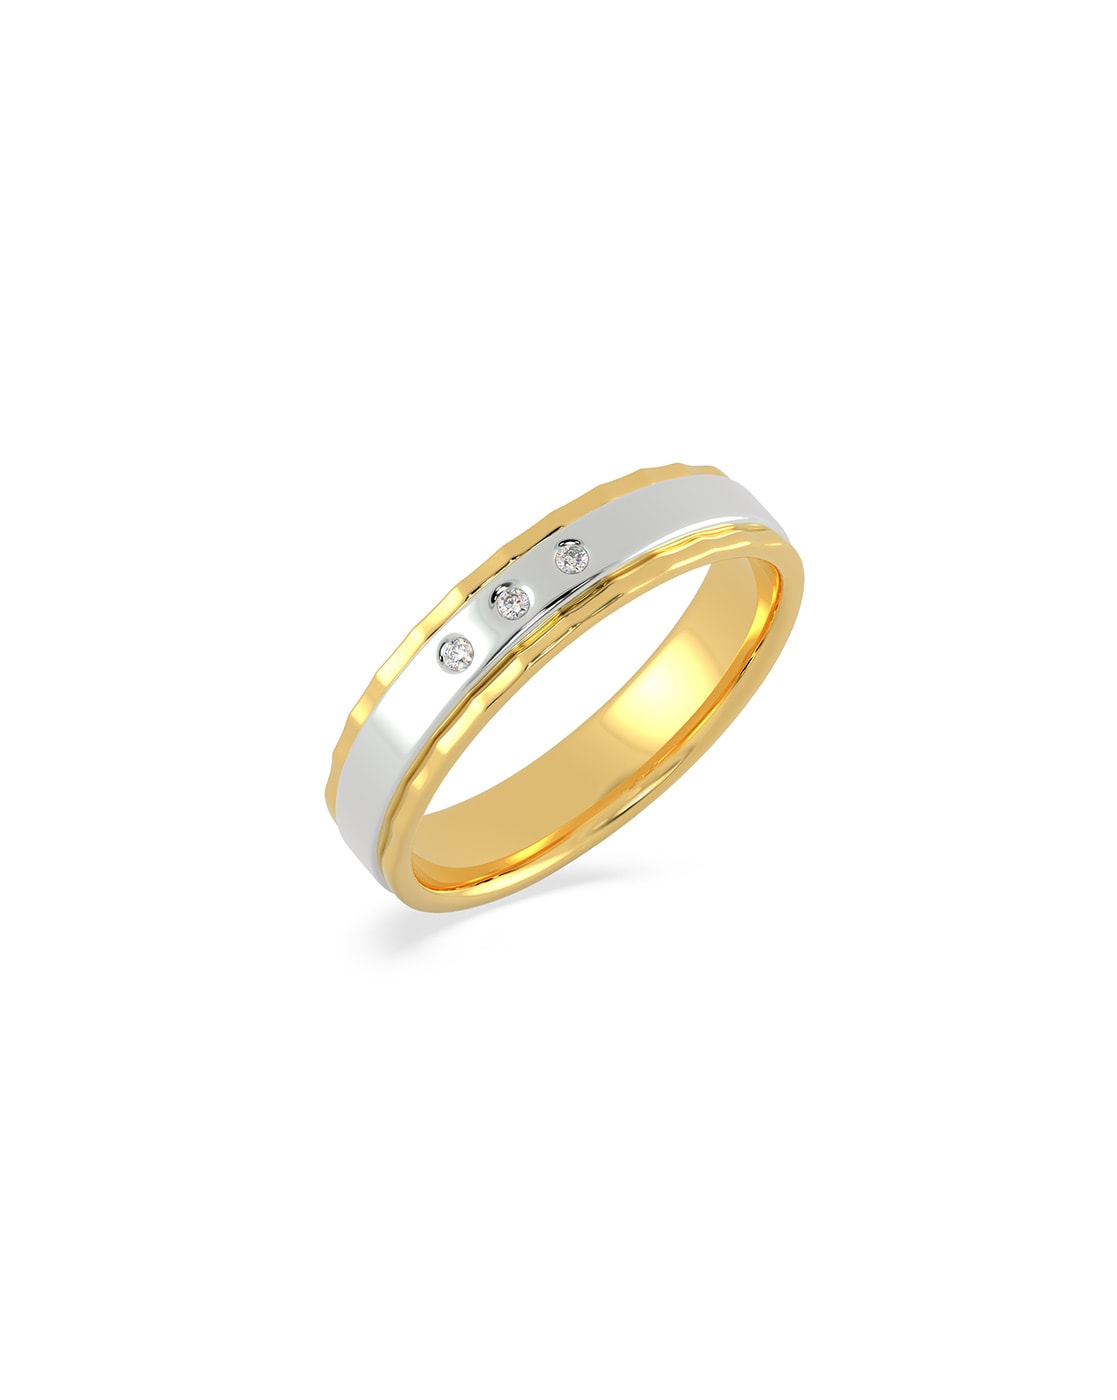 LMNZB Original Certified Tibetan Silver Ring Luxury 0.5ct 5mm Zirconia  Diamant Wedding Band Fashion Jewelry Gift for Women R036